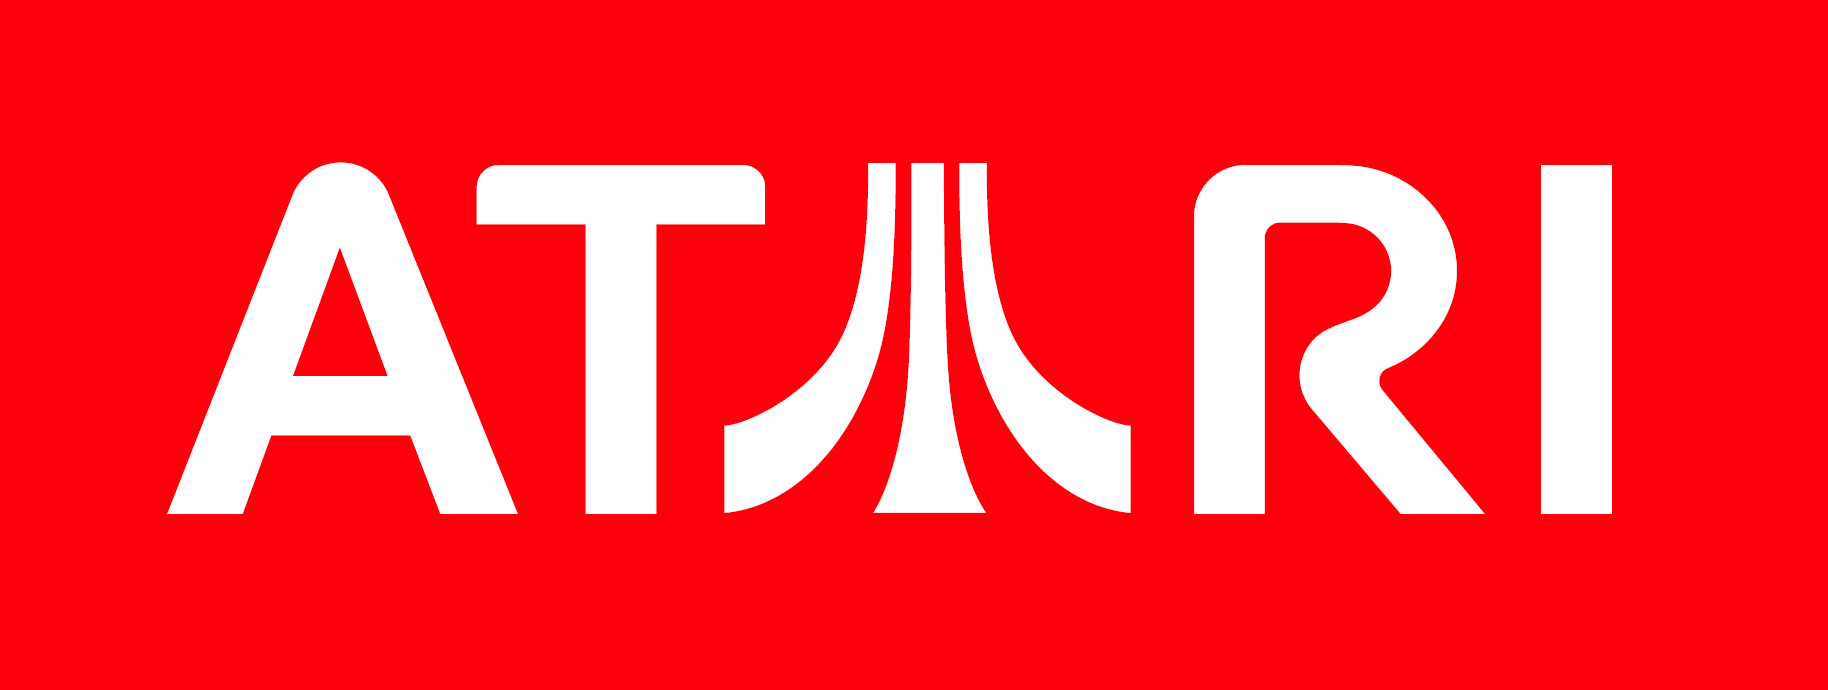 Former Atari CEO Bids to Save Company